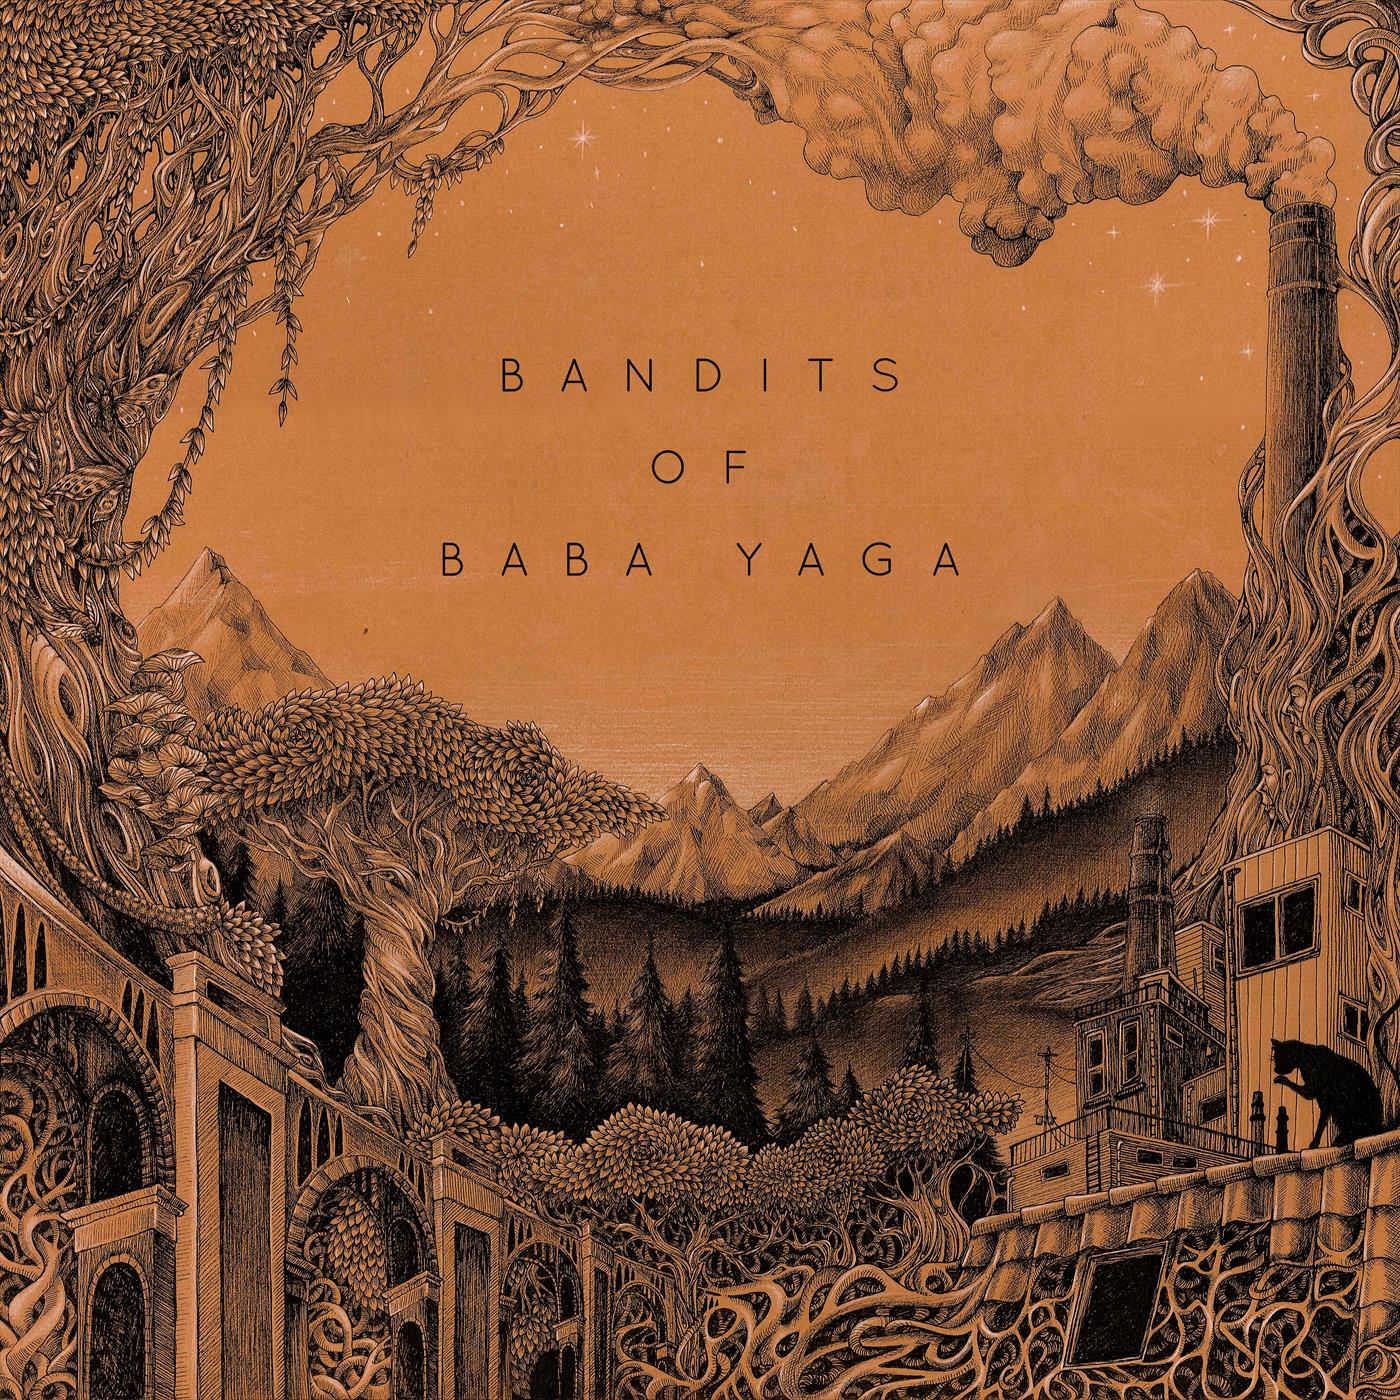 Bandits of Baba Yaga